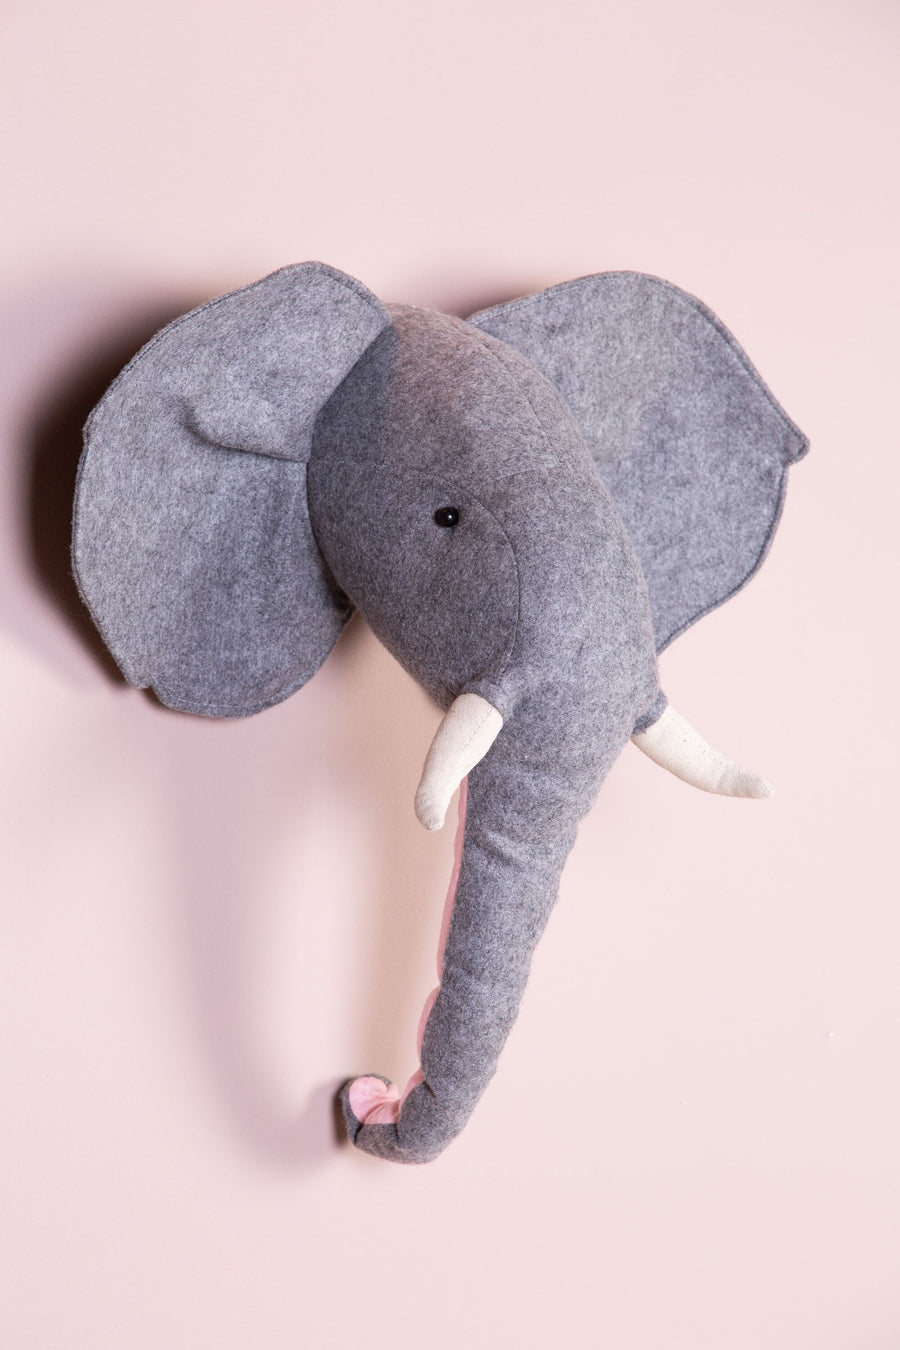 Felt elephant head to hang - Childhome